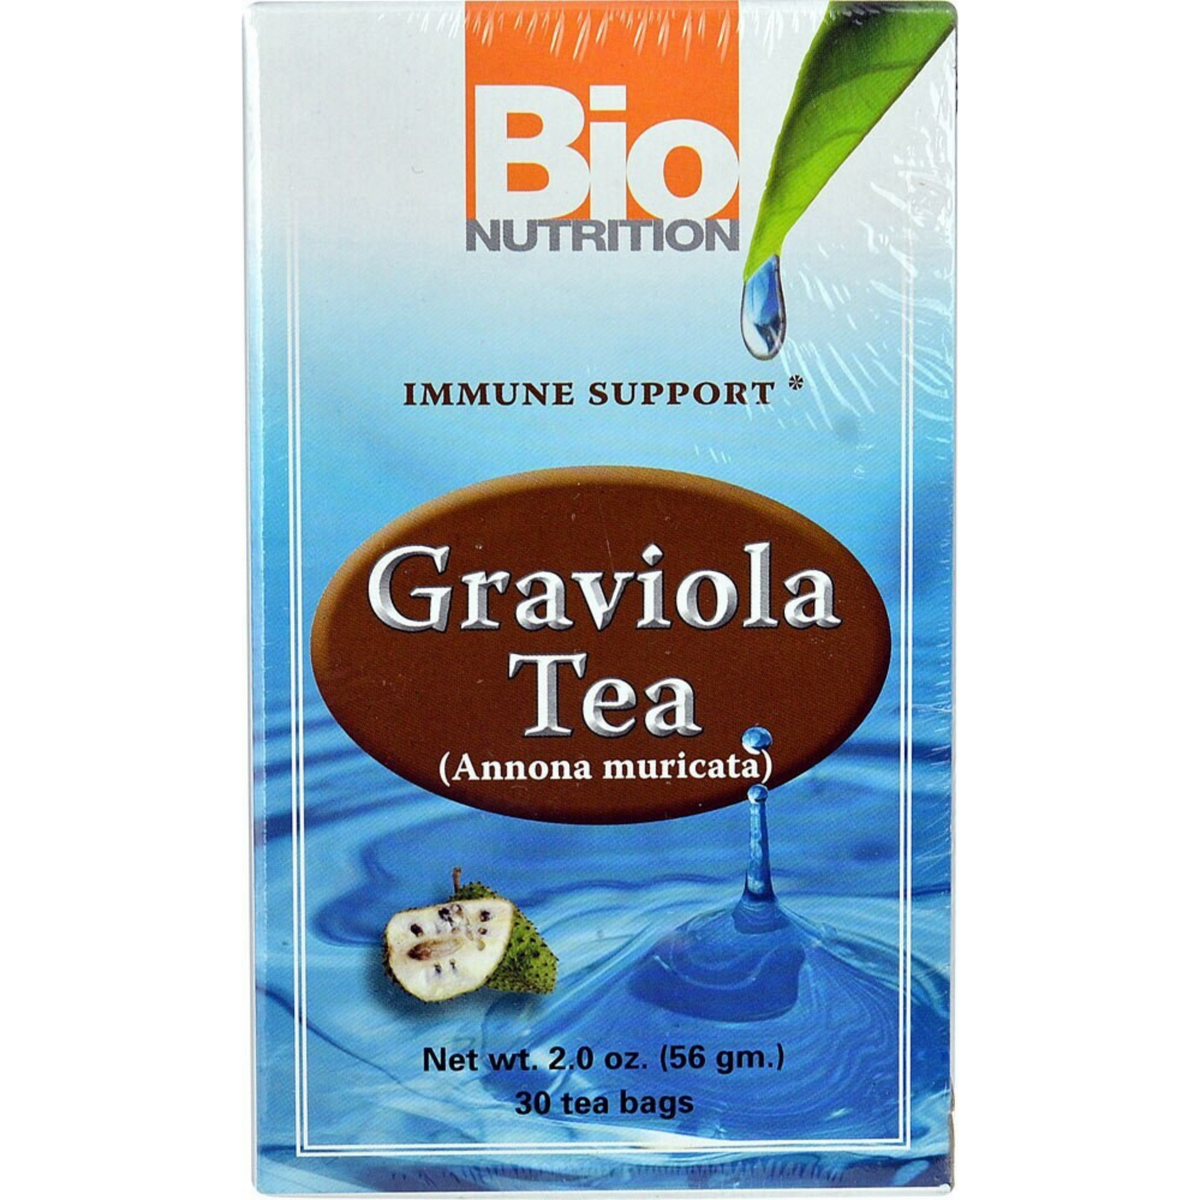 Primary Image of Graviola Tea Bags